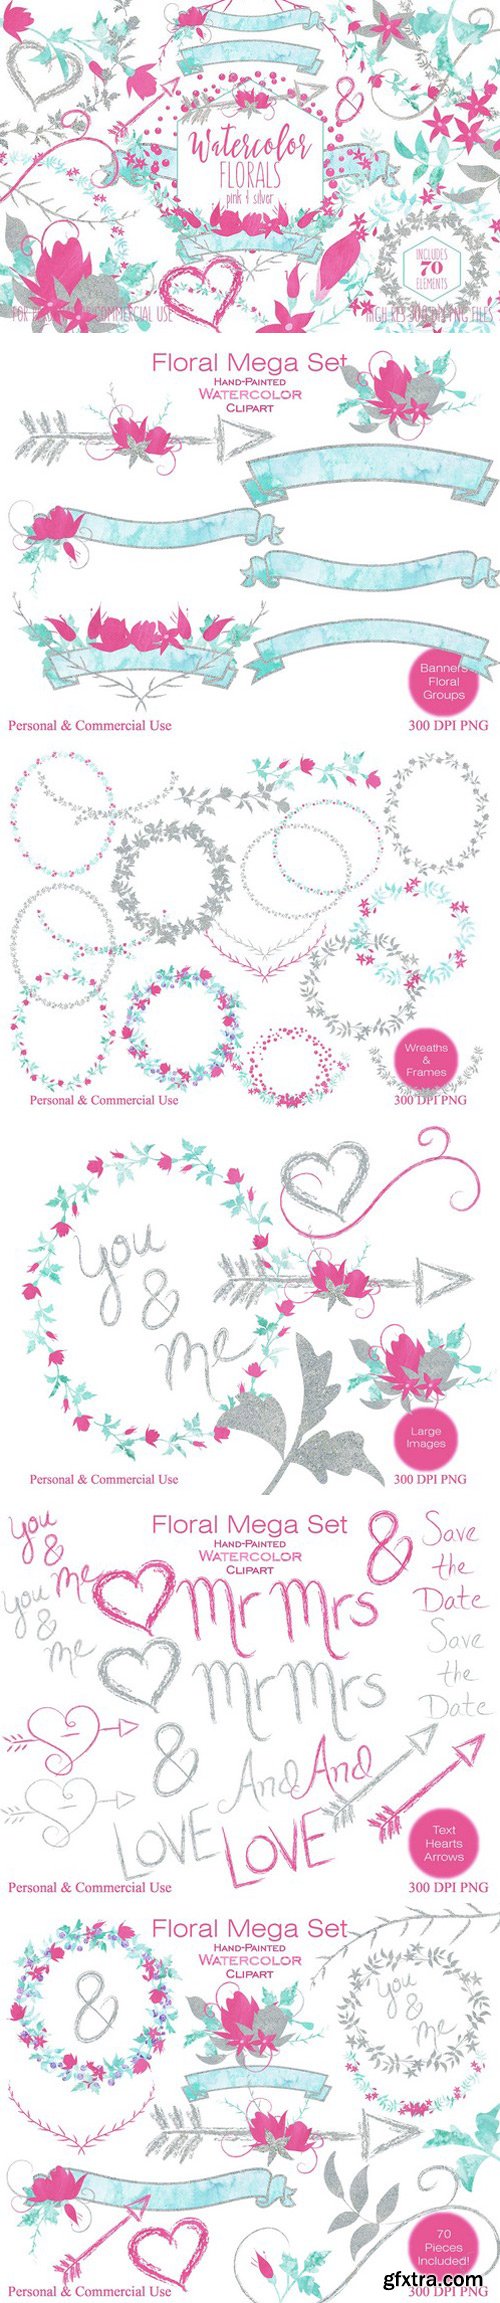 CM - Pink & Silver Watercolor Floral Set 2176133